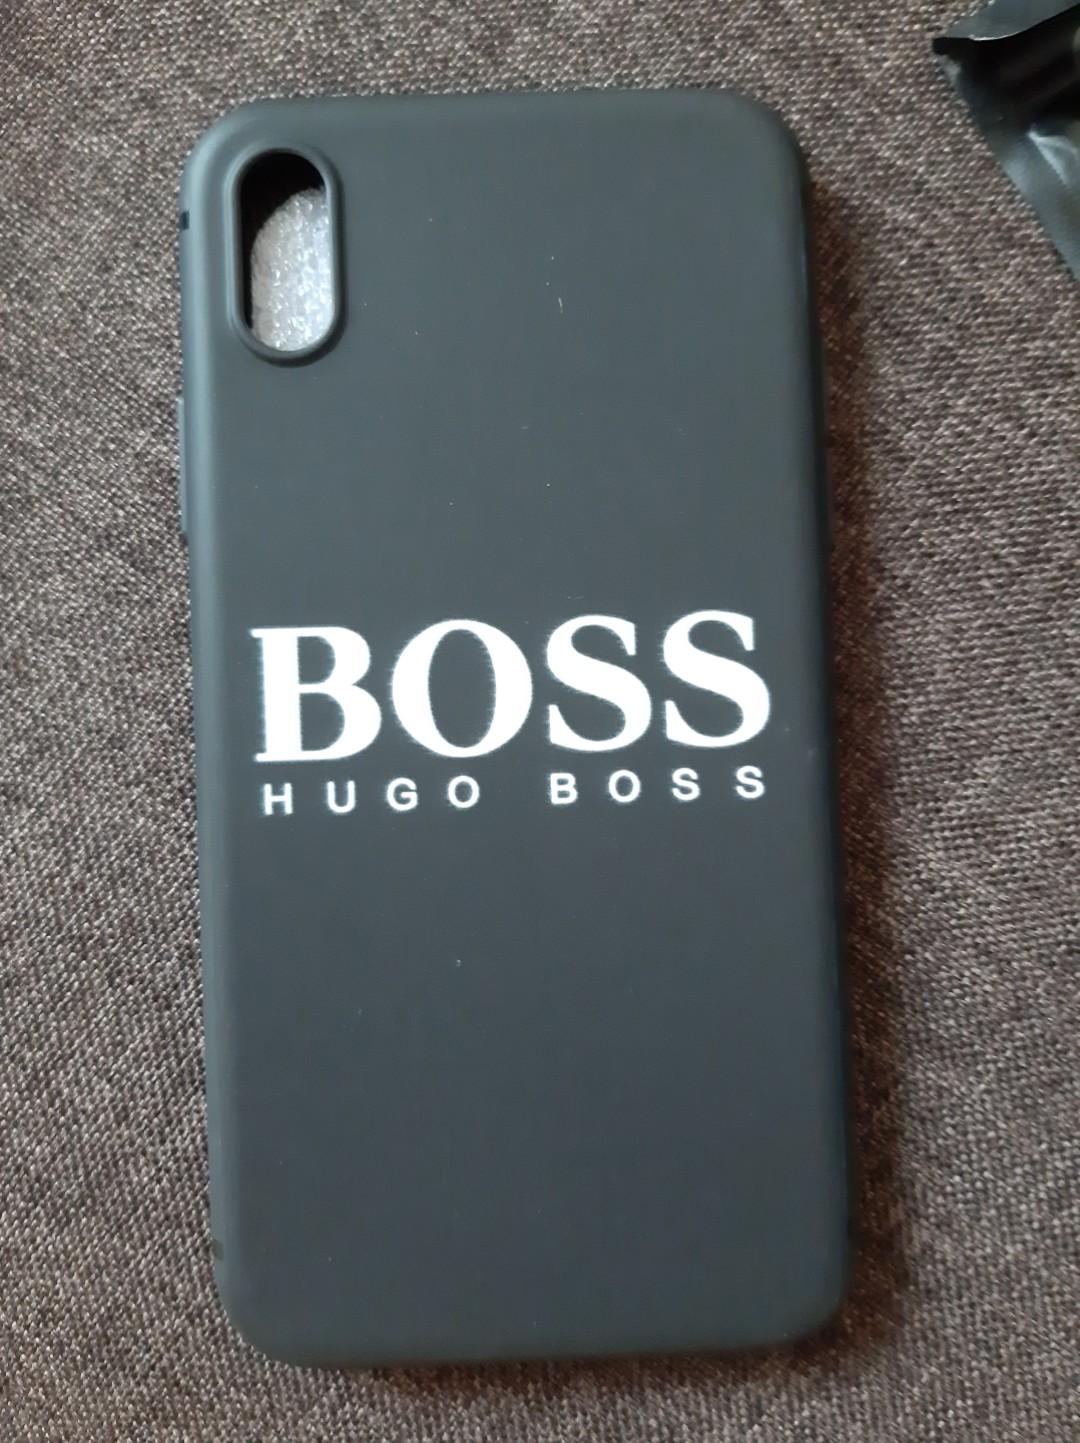 hugo boss iphone